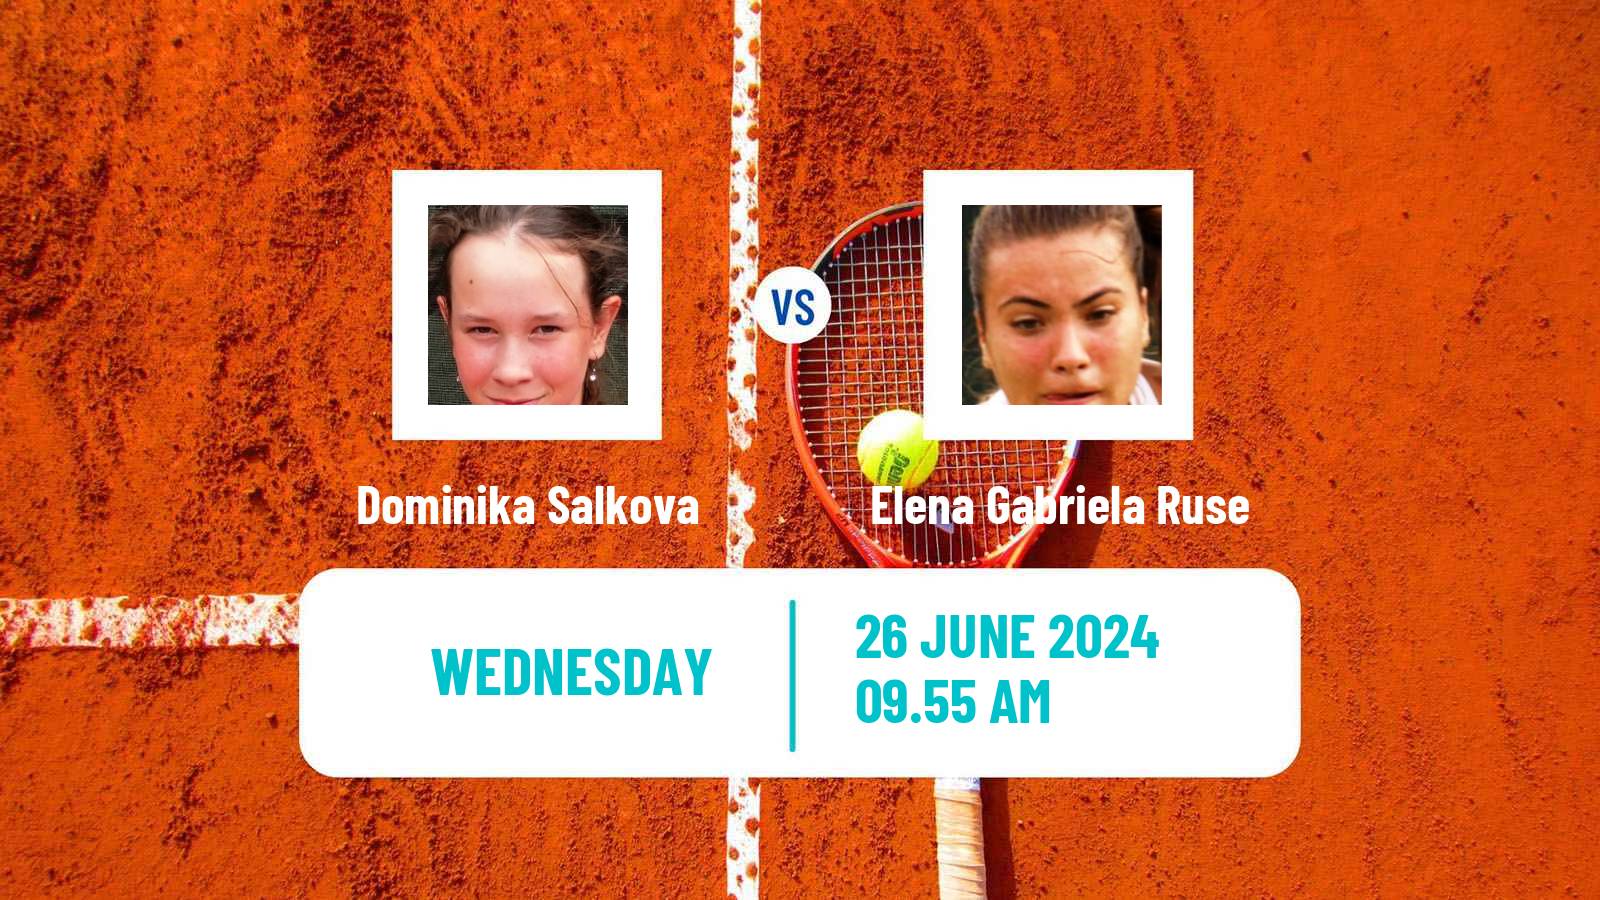 Tennis WTA Wimbledon Dominika Salkova - Elena Gabriela Ruse